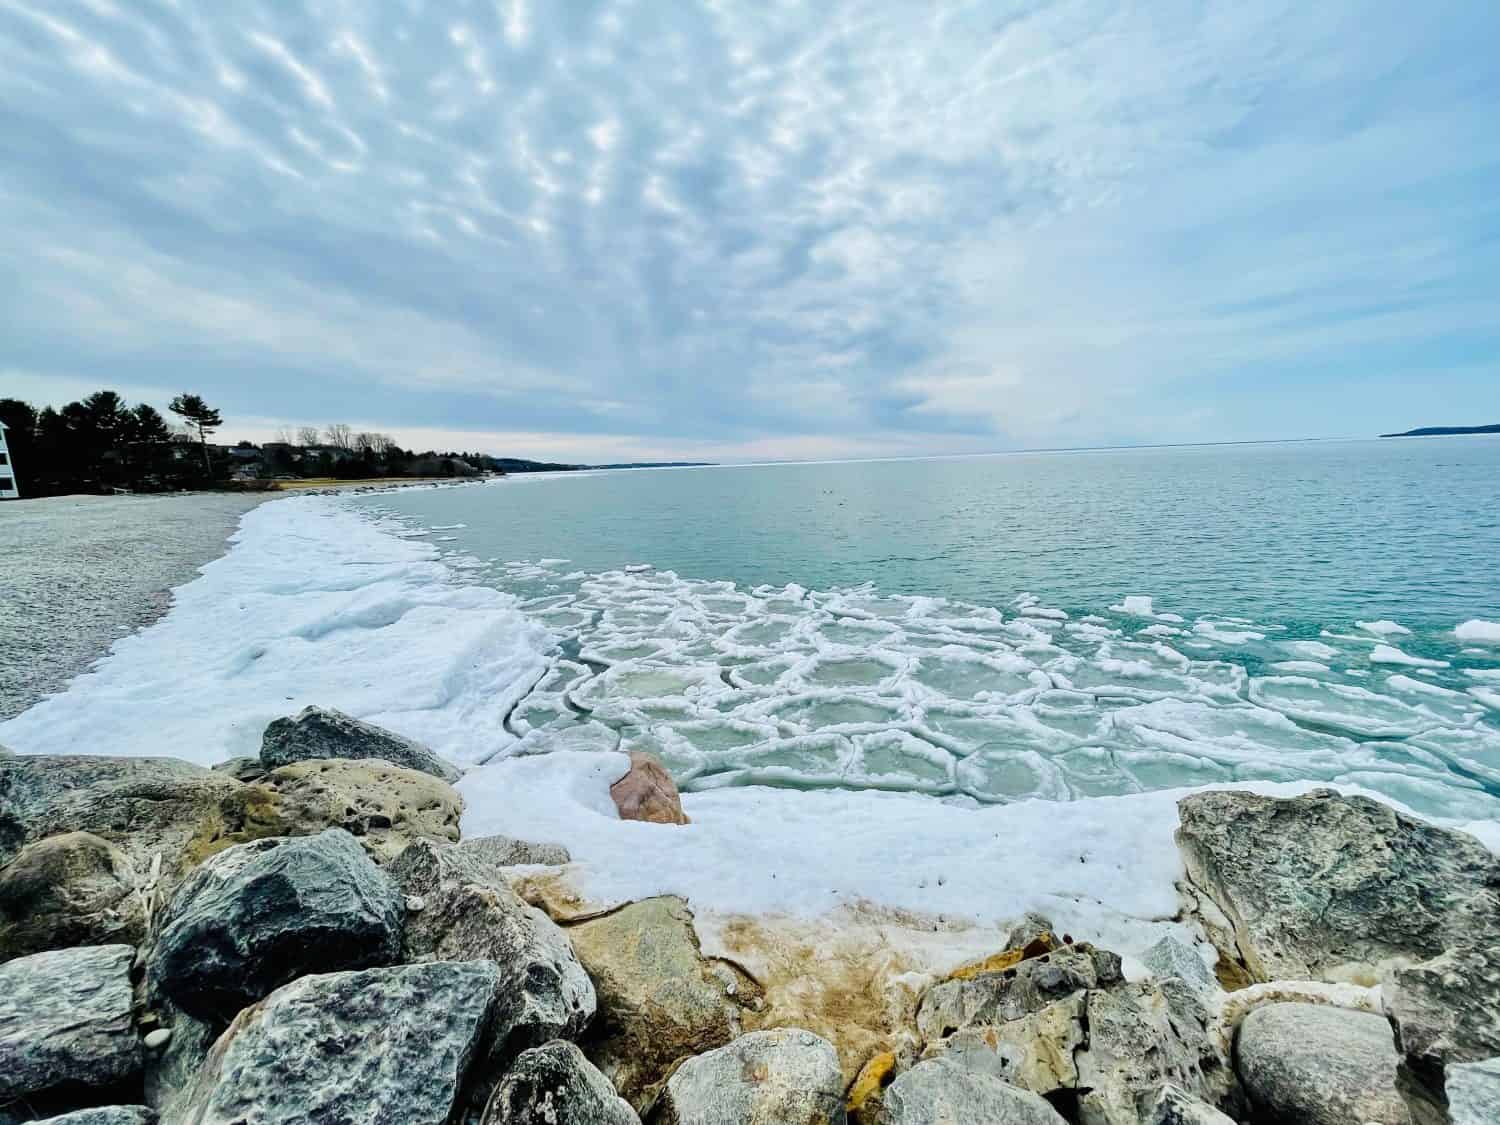 Winter in Petoskey, Michigan shoreline